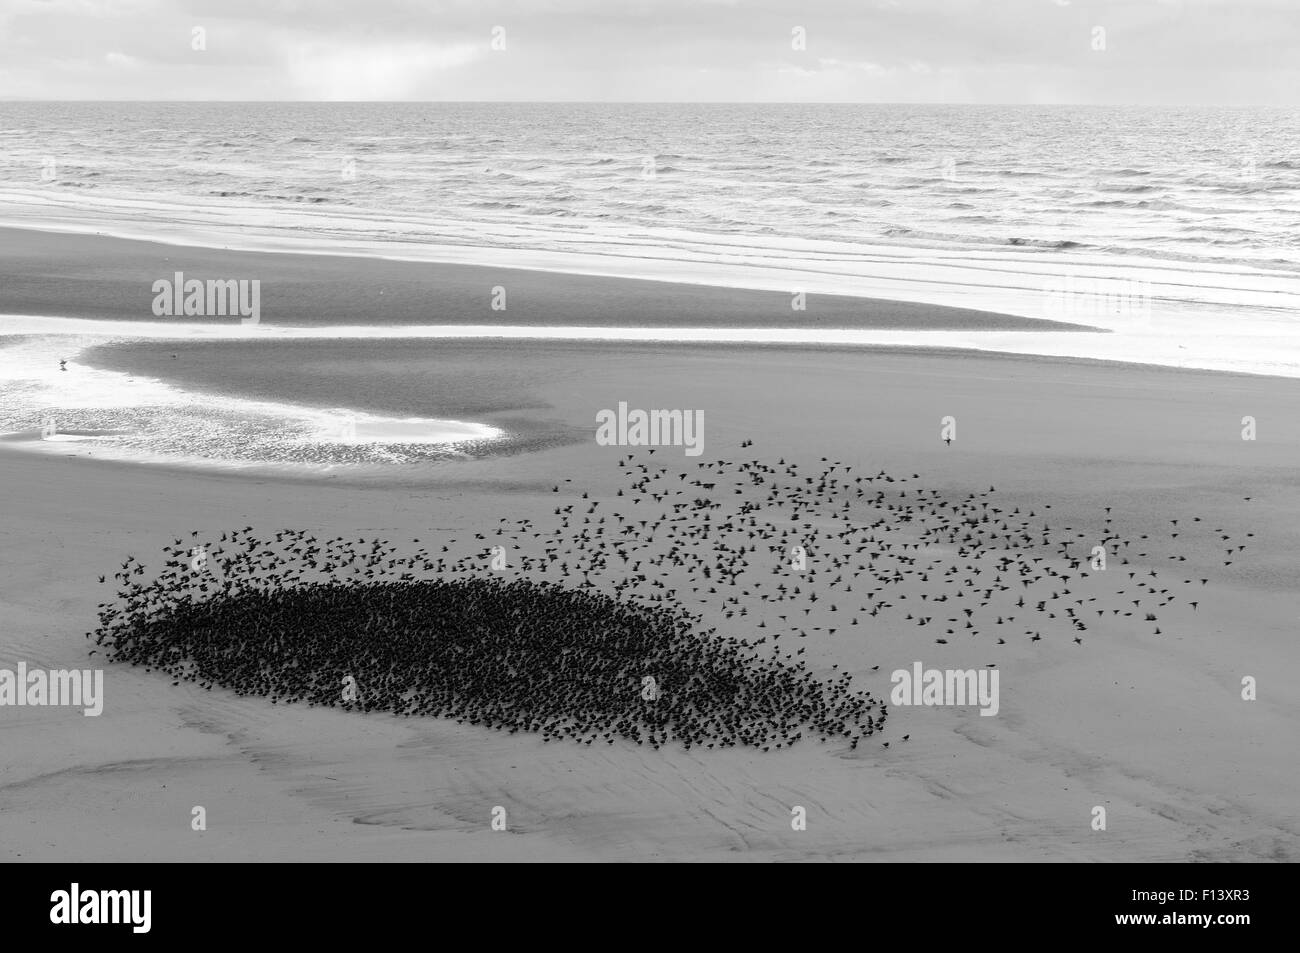 A flock of Starlings (Sturnus vulgaris) taking off from Blackpool beach, England, UK. October 2010. Stock Photo